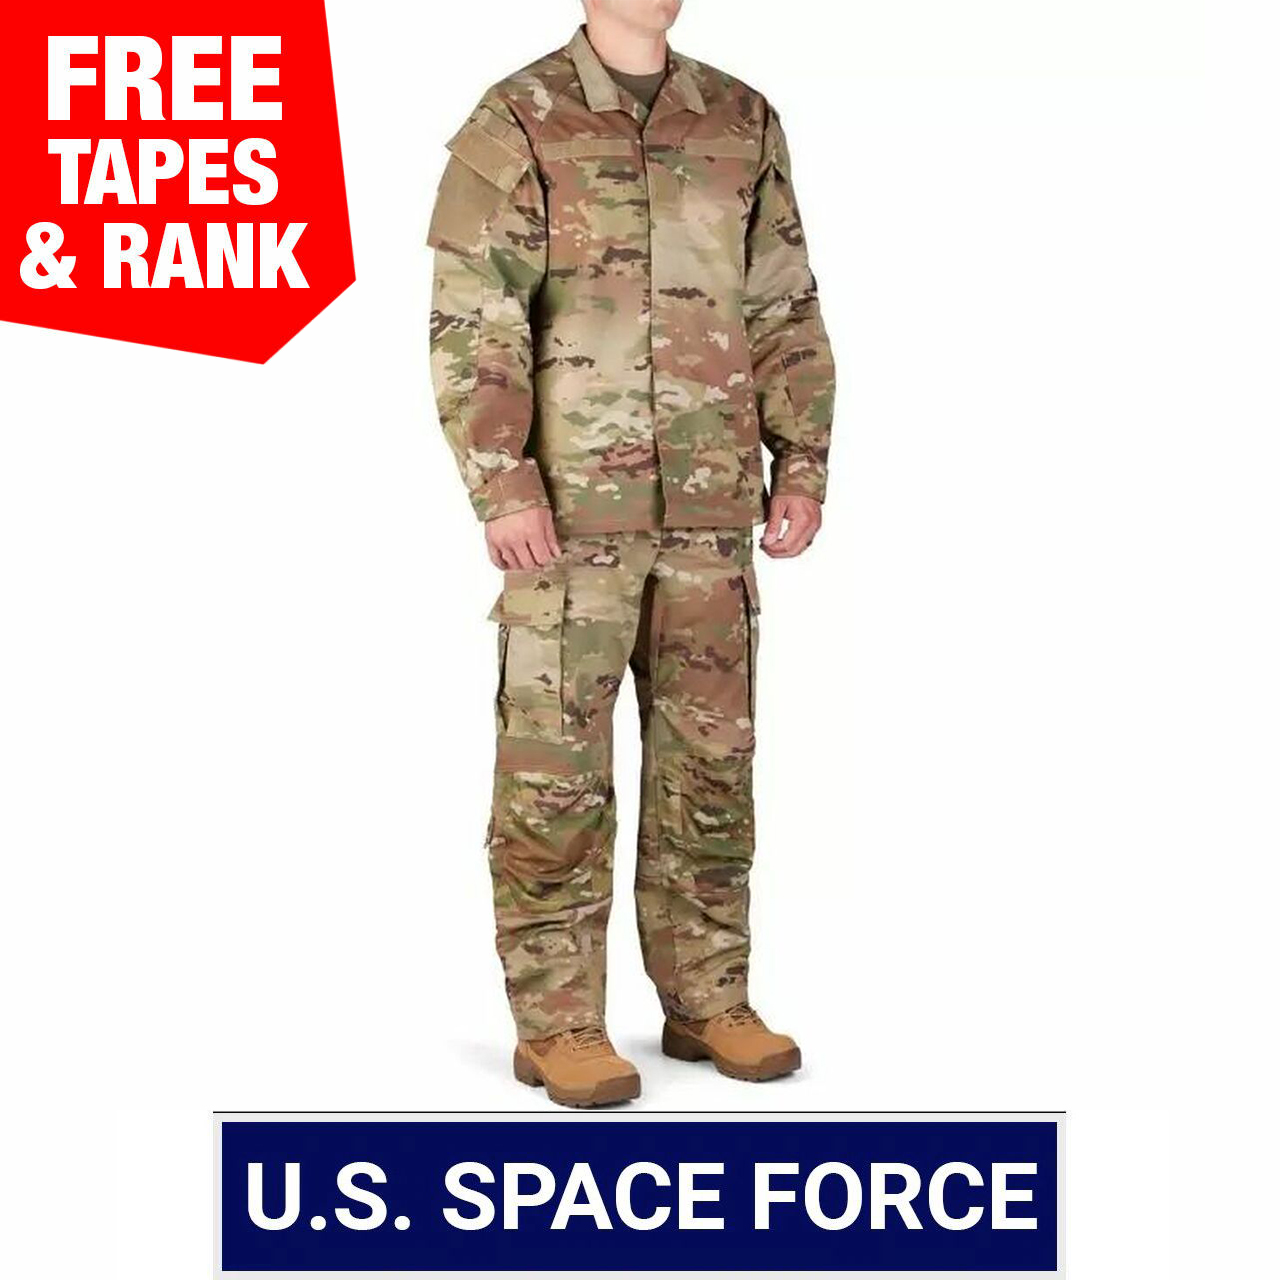 Space Force Duty Uniform (OCP)